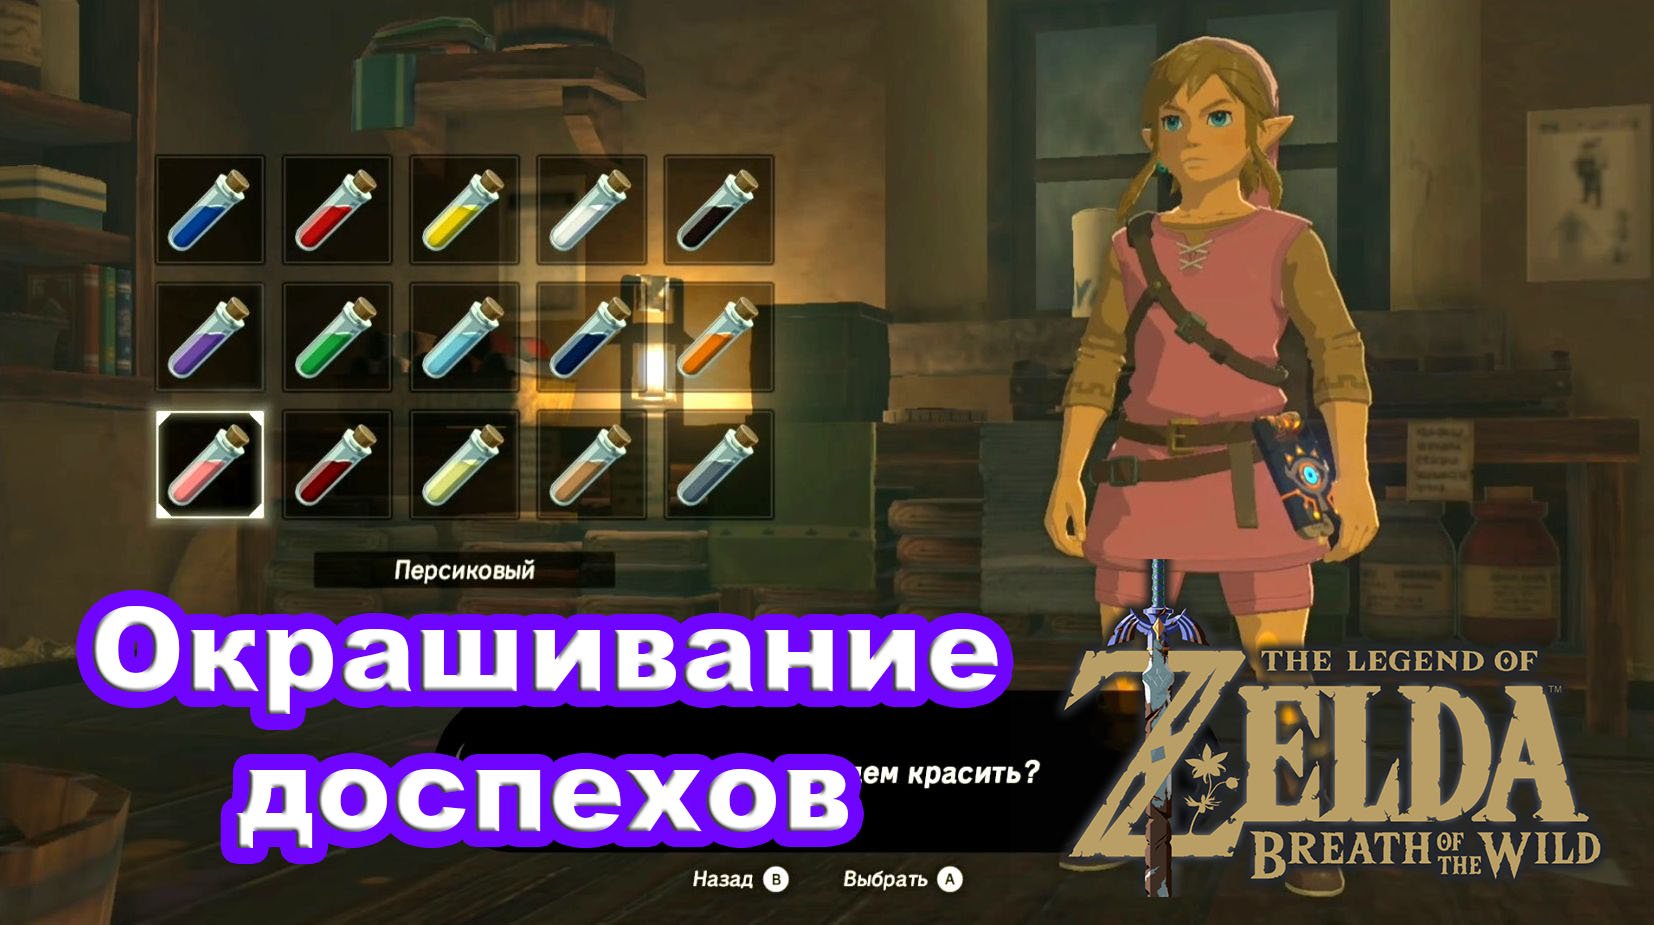 Перекрашивание доспехов. The Legend of Zelda Breath of the Wild. Nintendo Switch